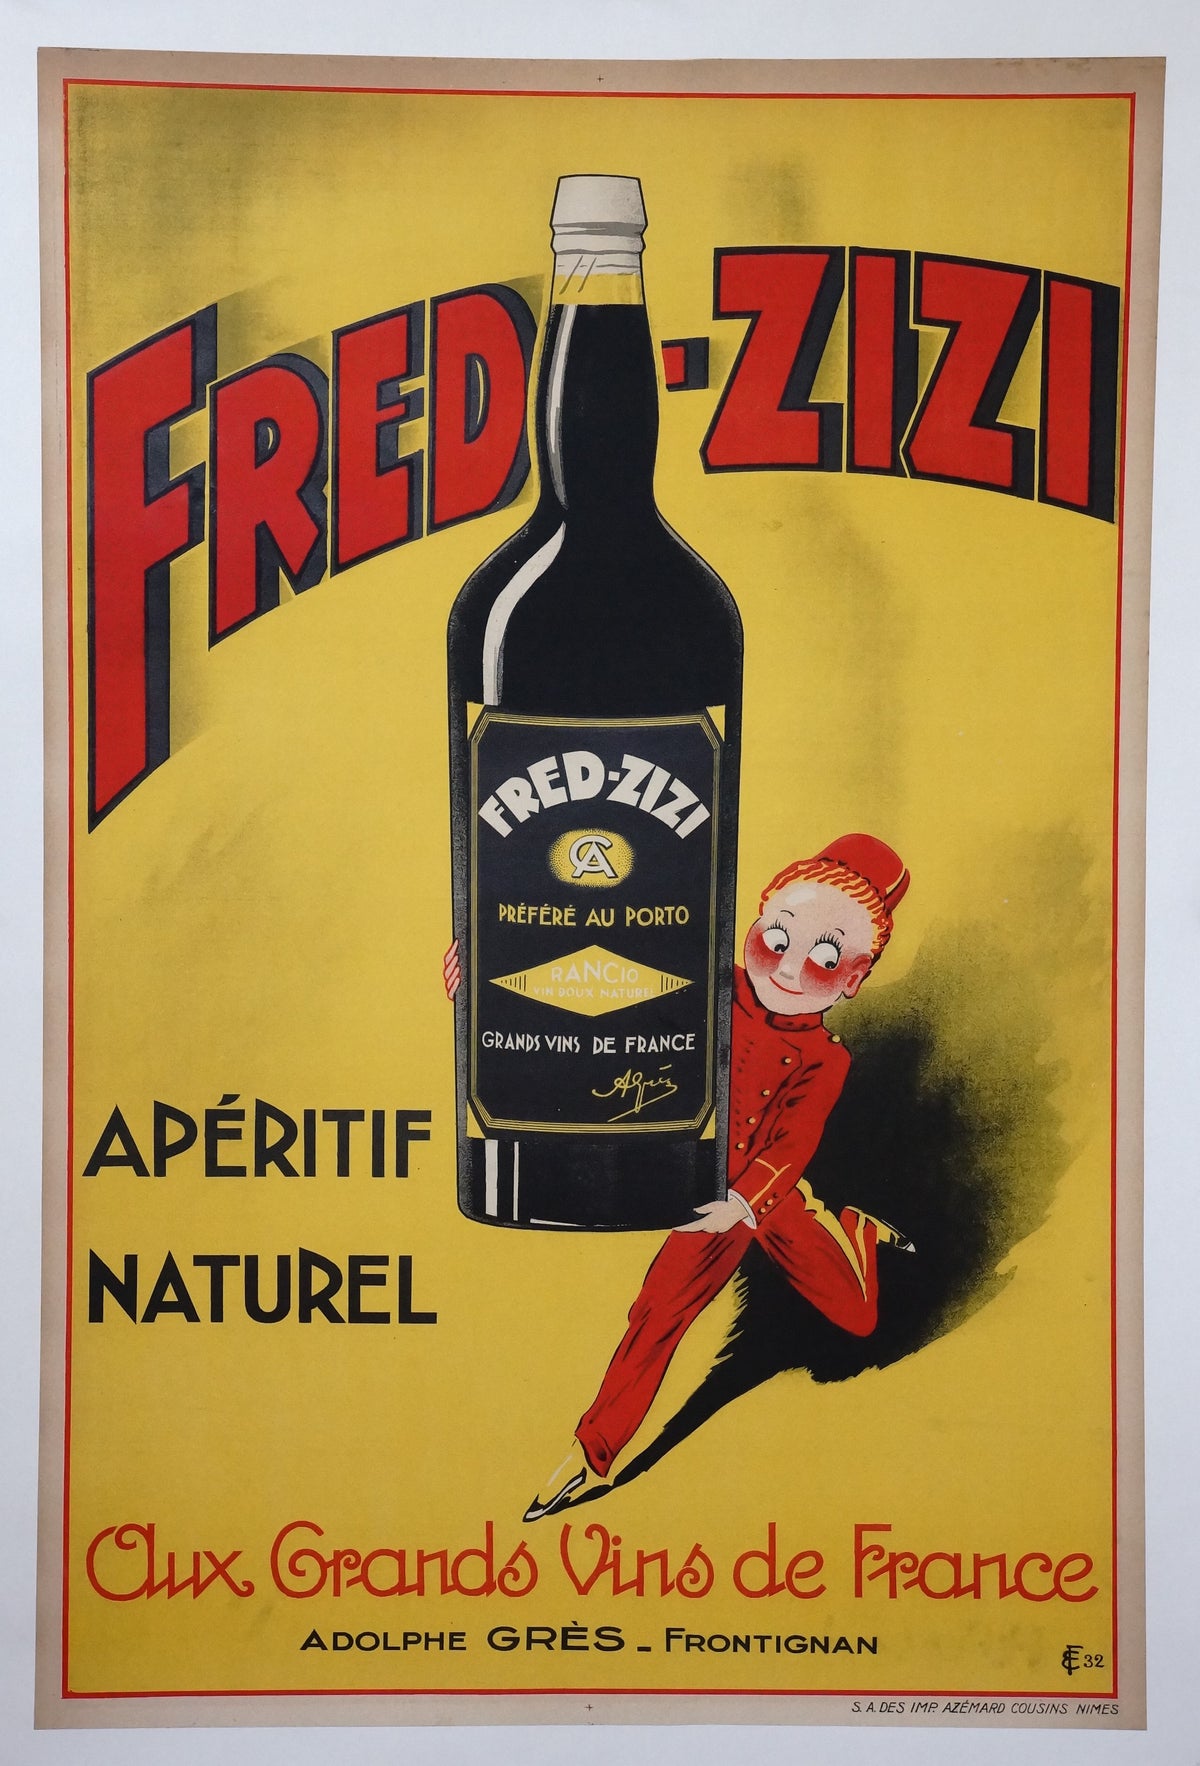 Fred Zizi Aperitif Naturel - Authentic Vintage Poster